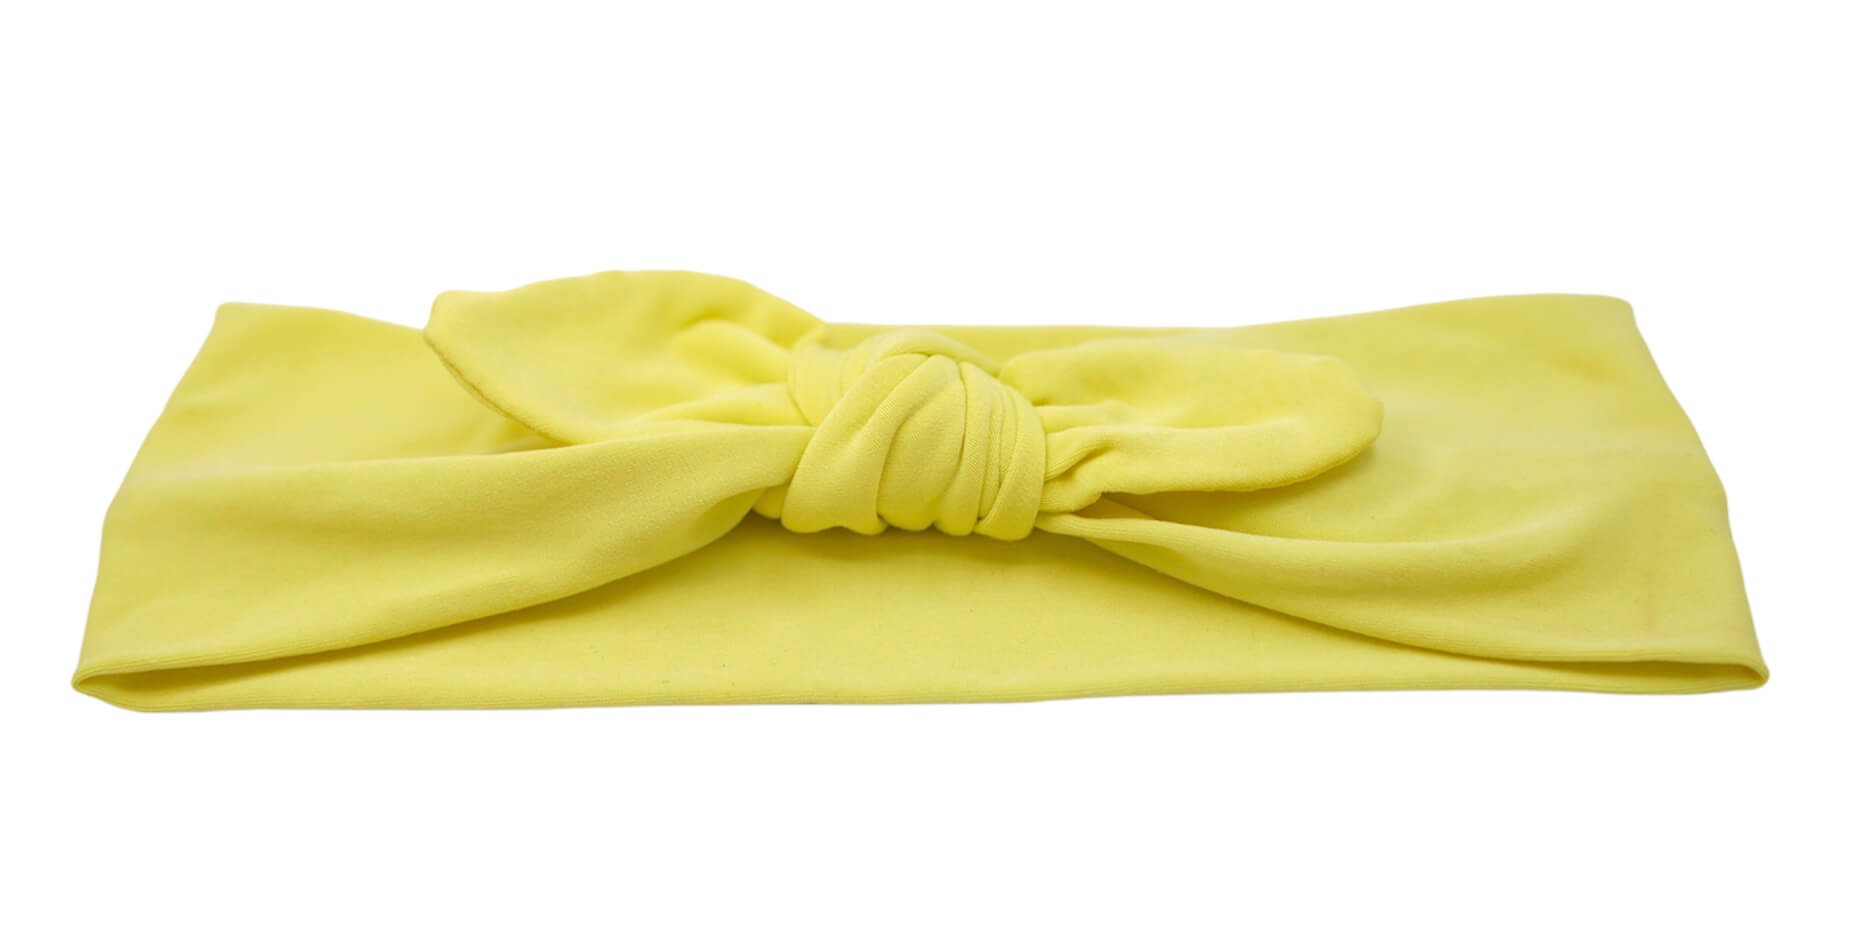 Yellow Top Knot Headband